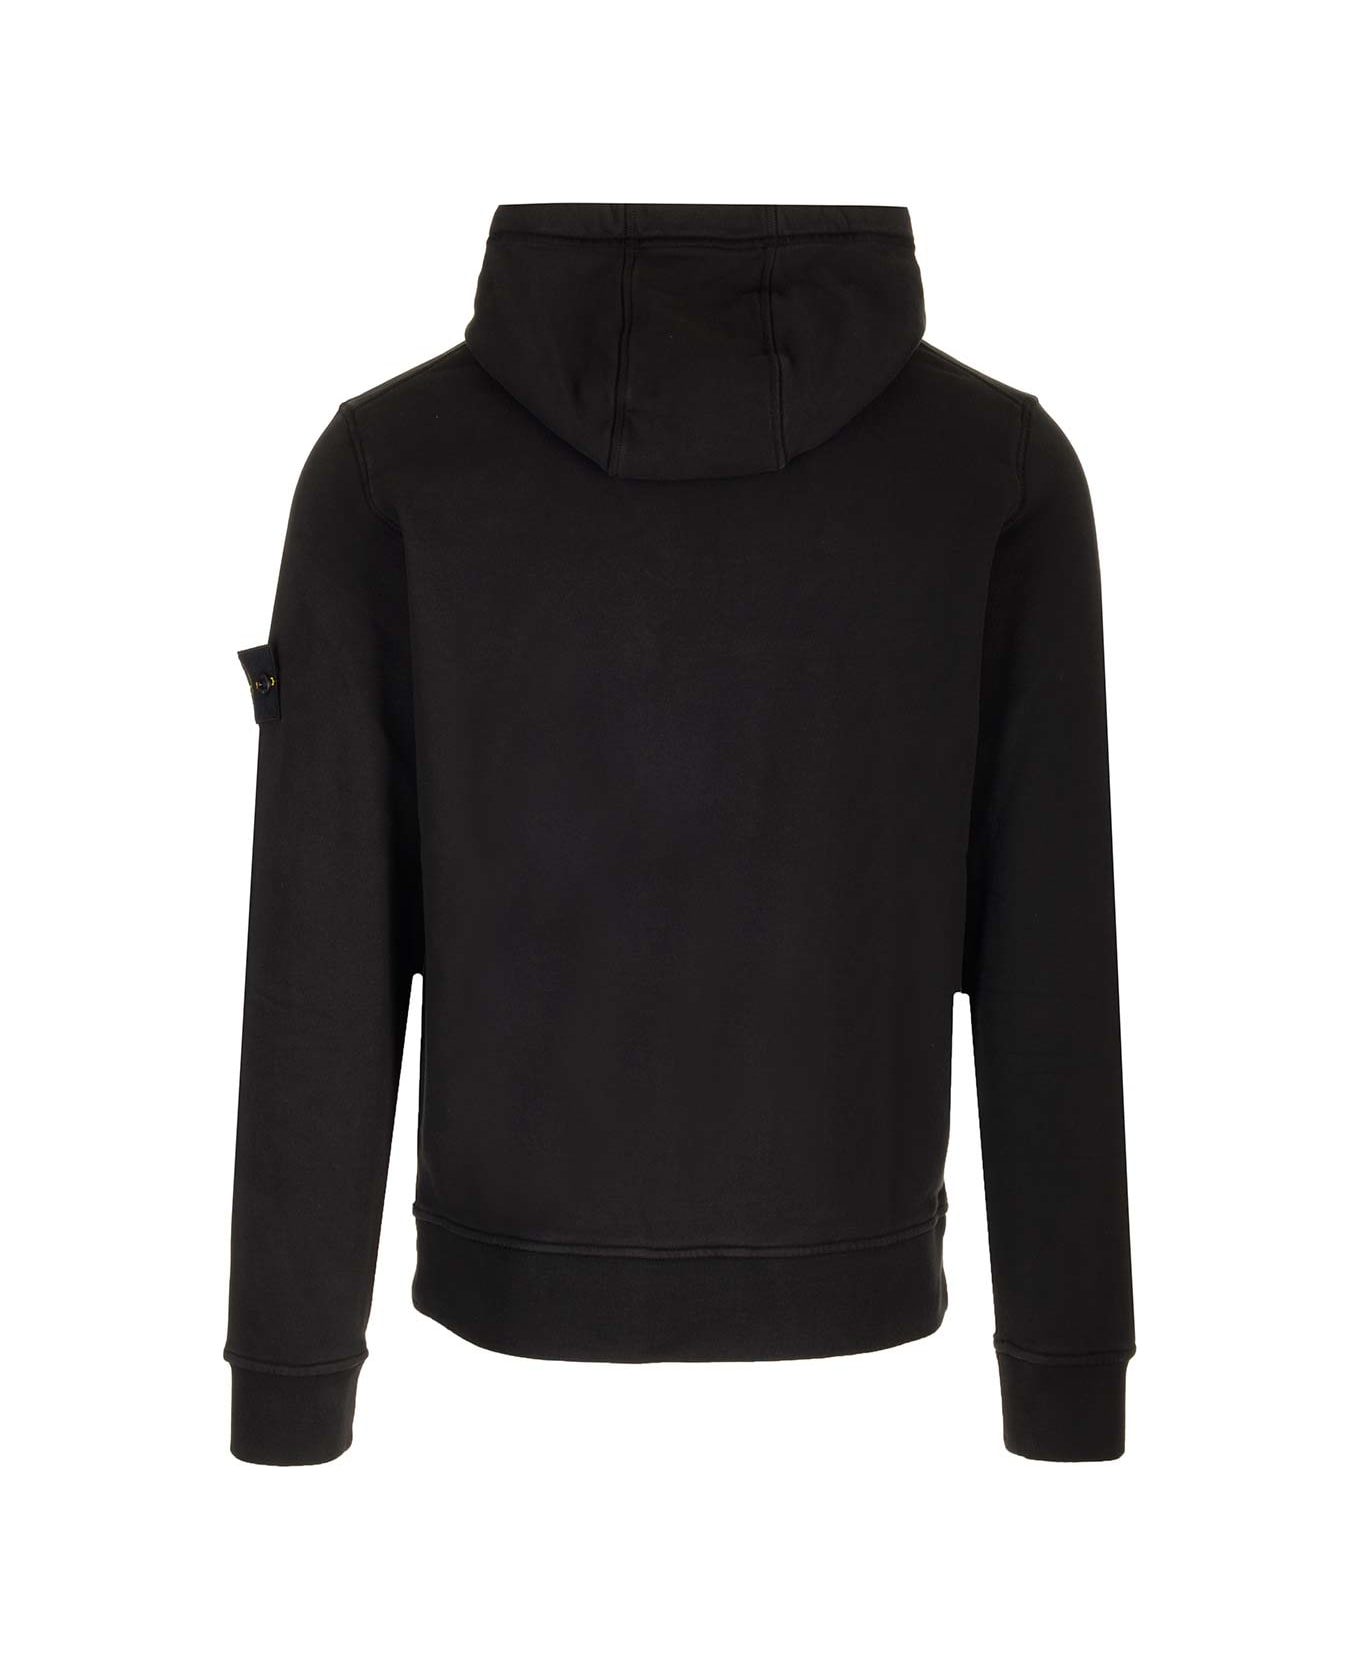 Stone Island Hooded Sweatshirt - Black